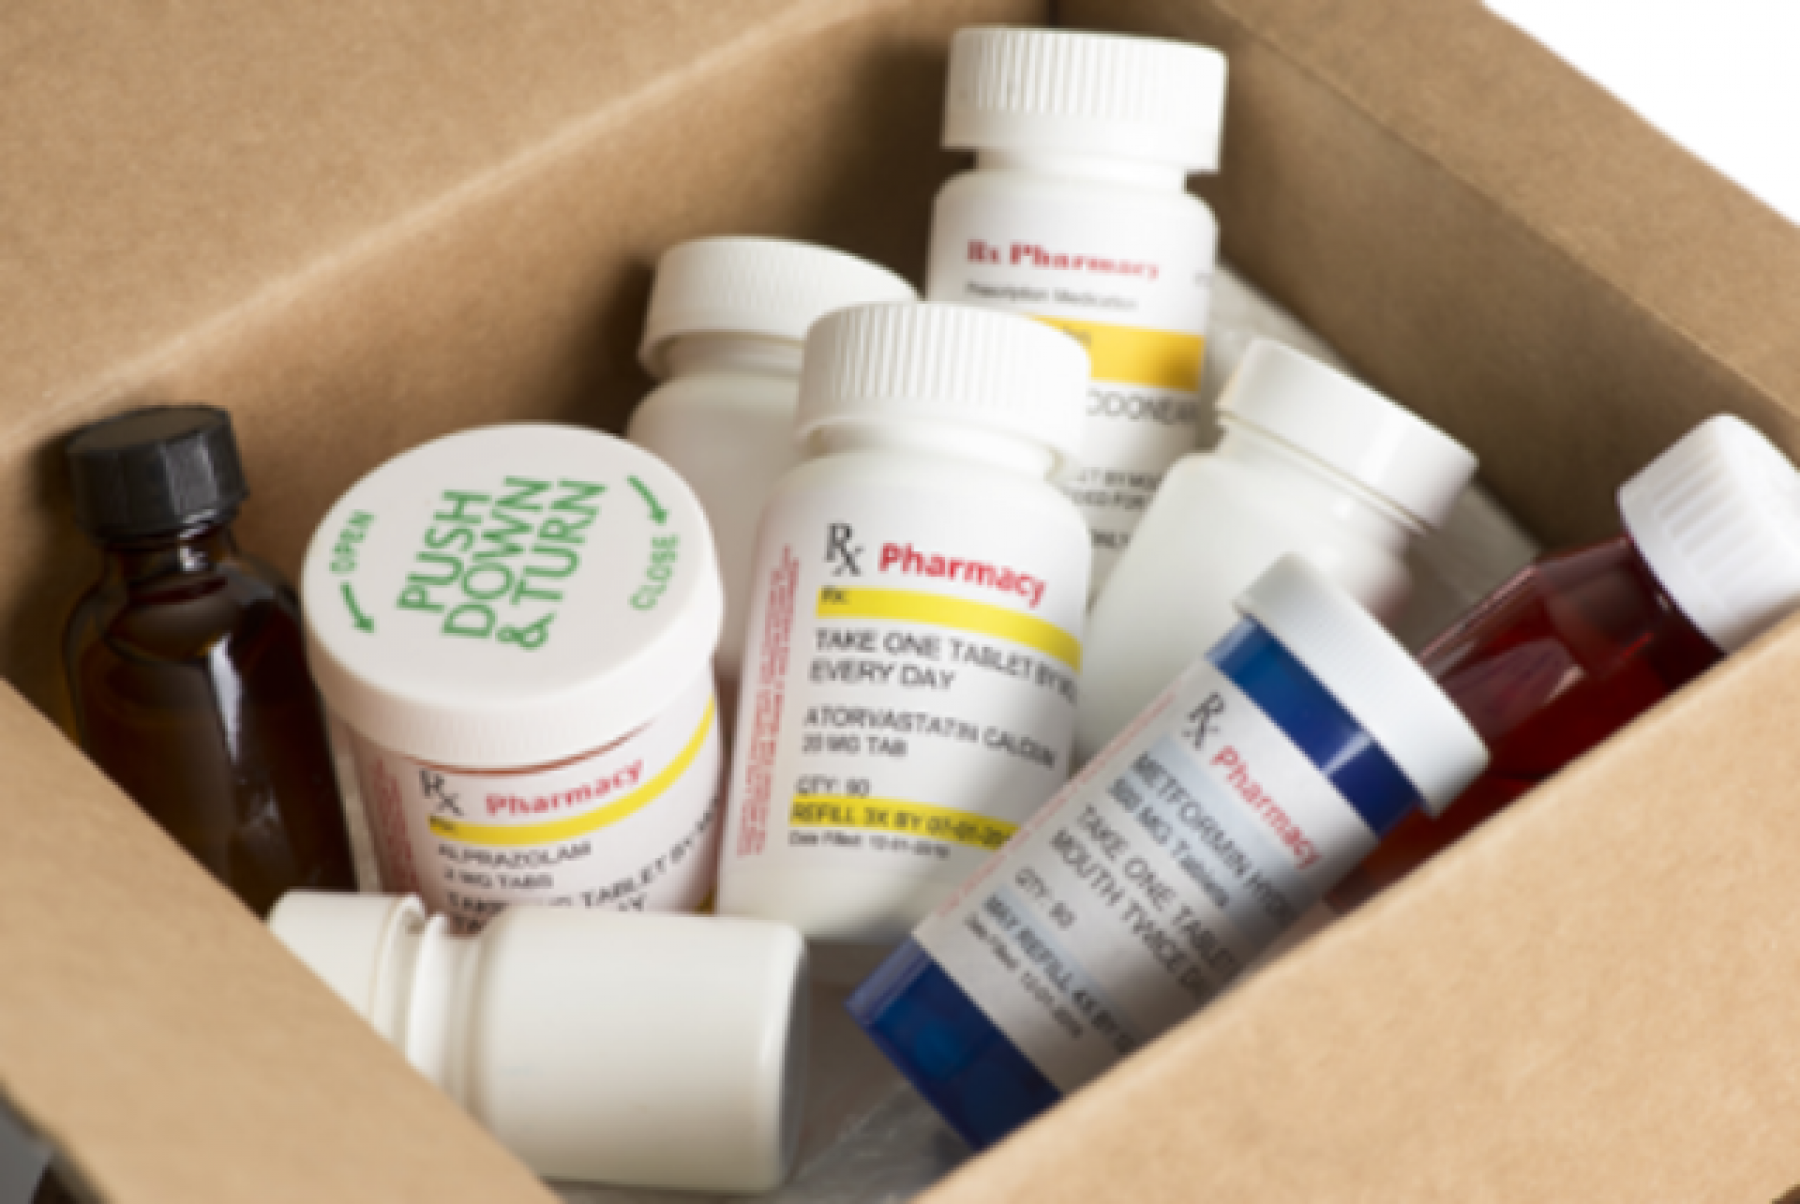 A cardboard box full of prescription drug bottles.